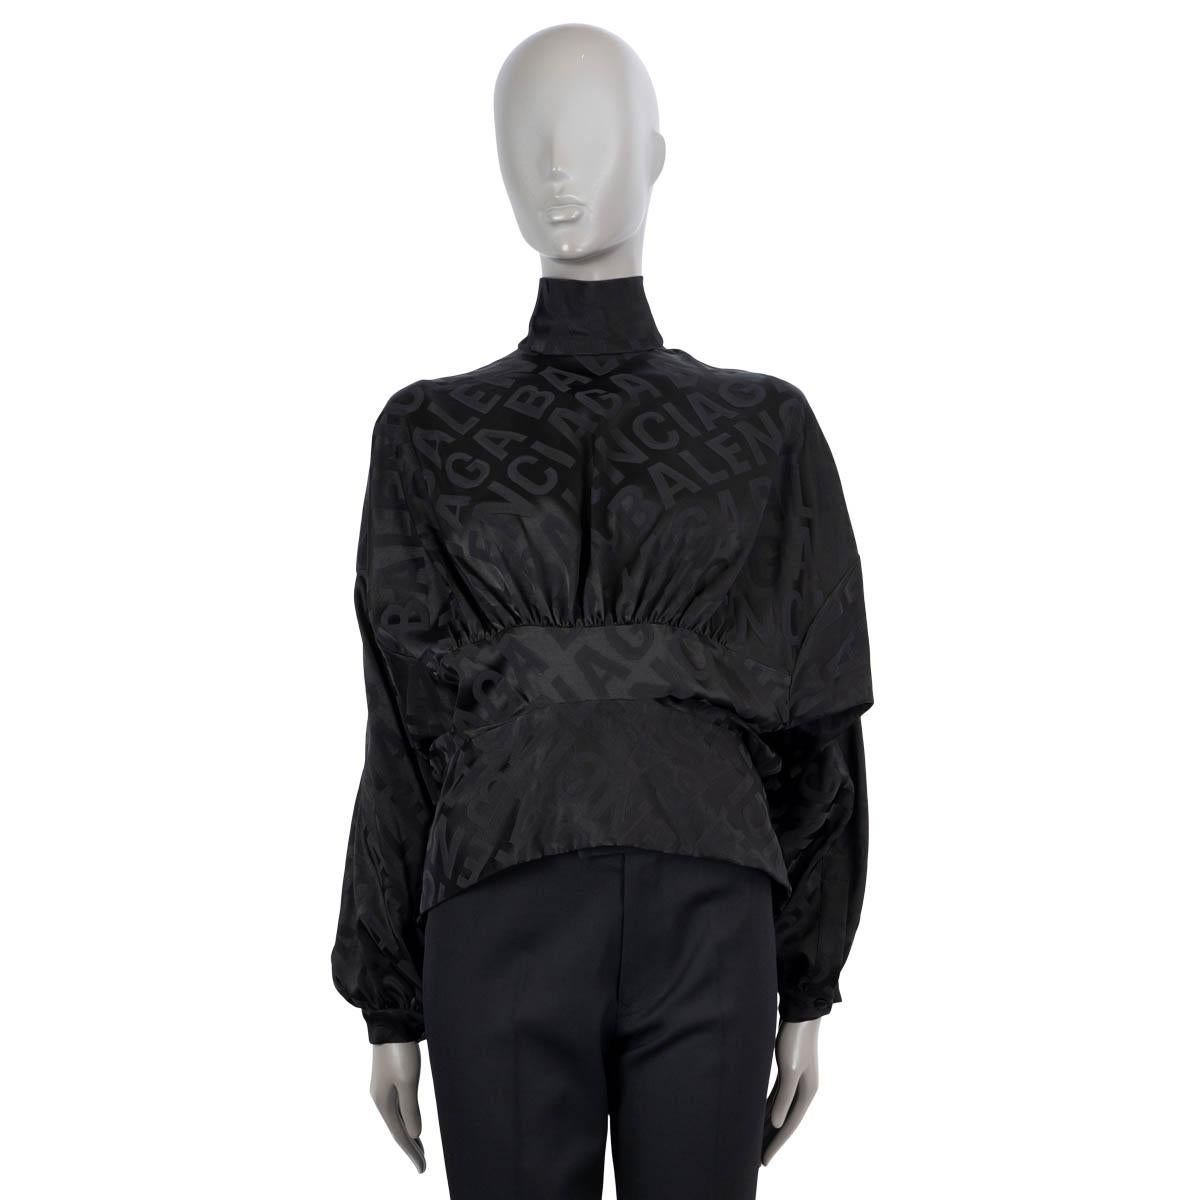 Black BALENCIAGA black 2020 UPSIDE DOWN HIGH NECK LOGO SATIN Blouse Shirt 36 XS For Sale